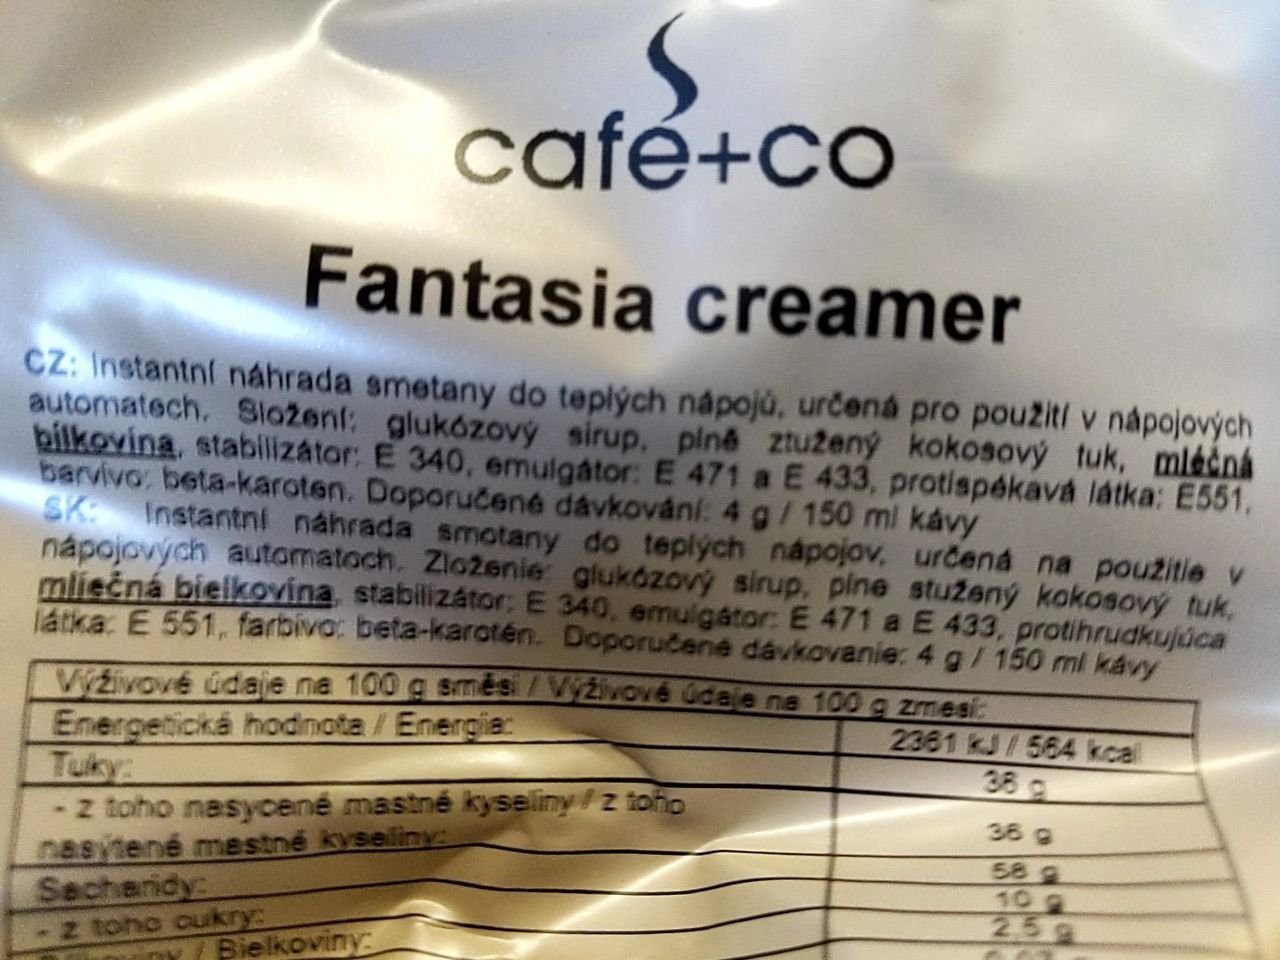 Instantní náhrada smetany cafe+co Fantasia creamer